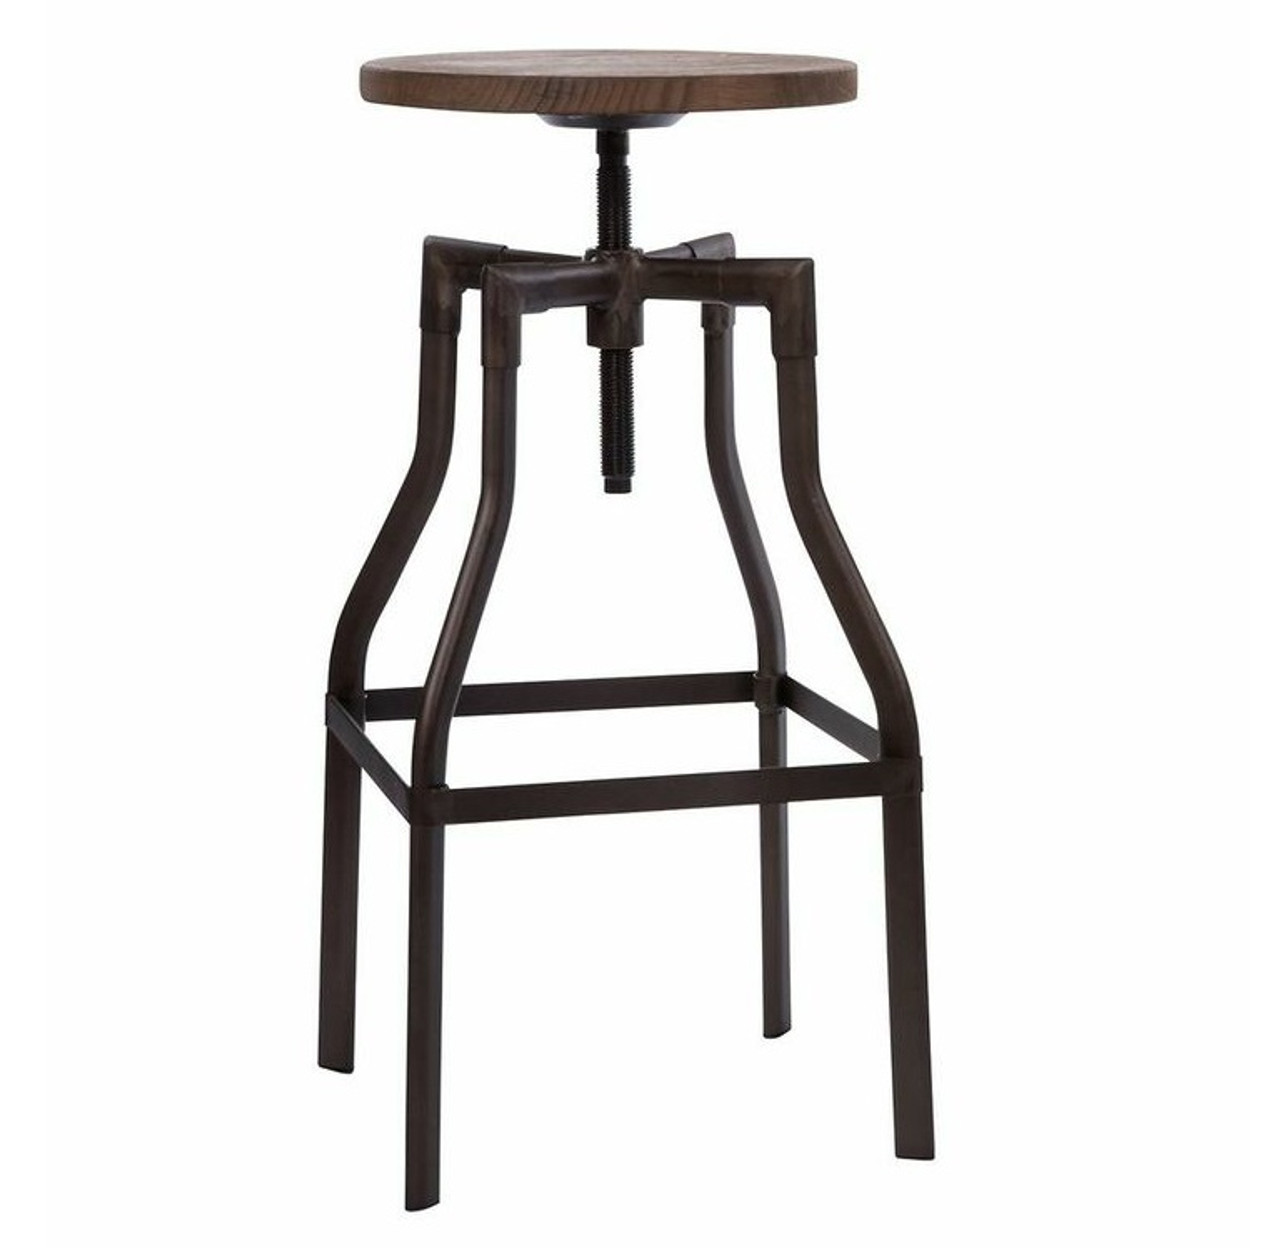 metal bar stools